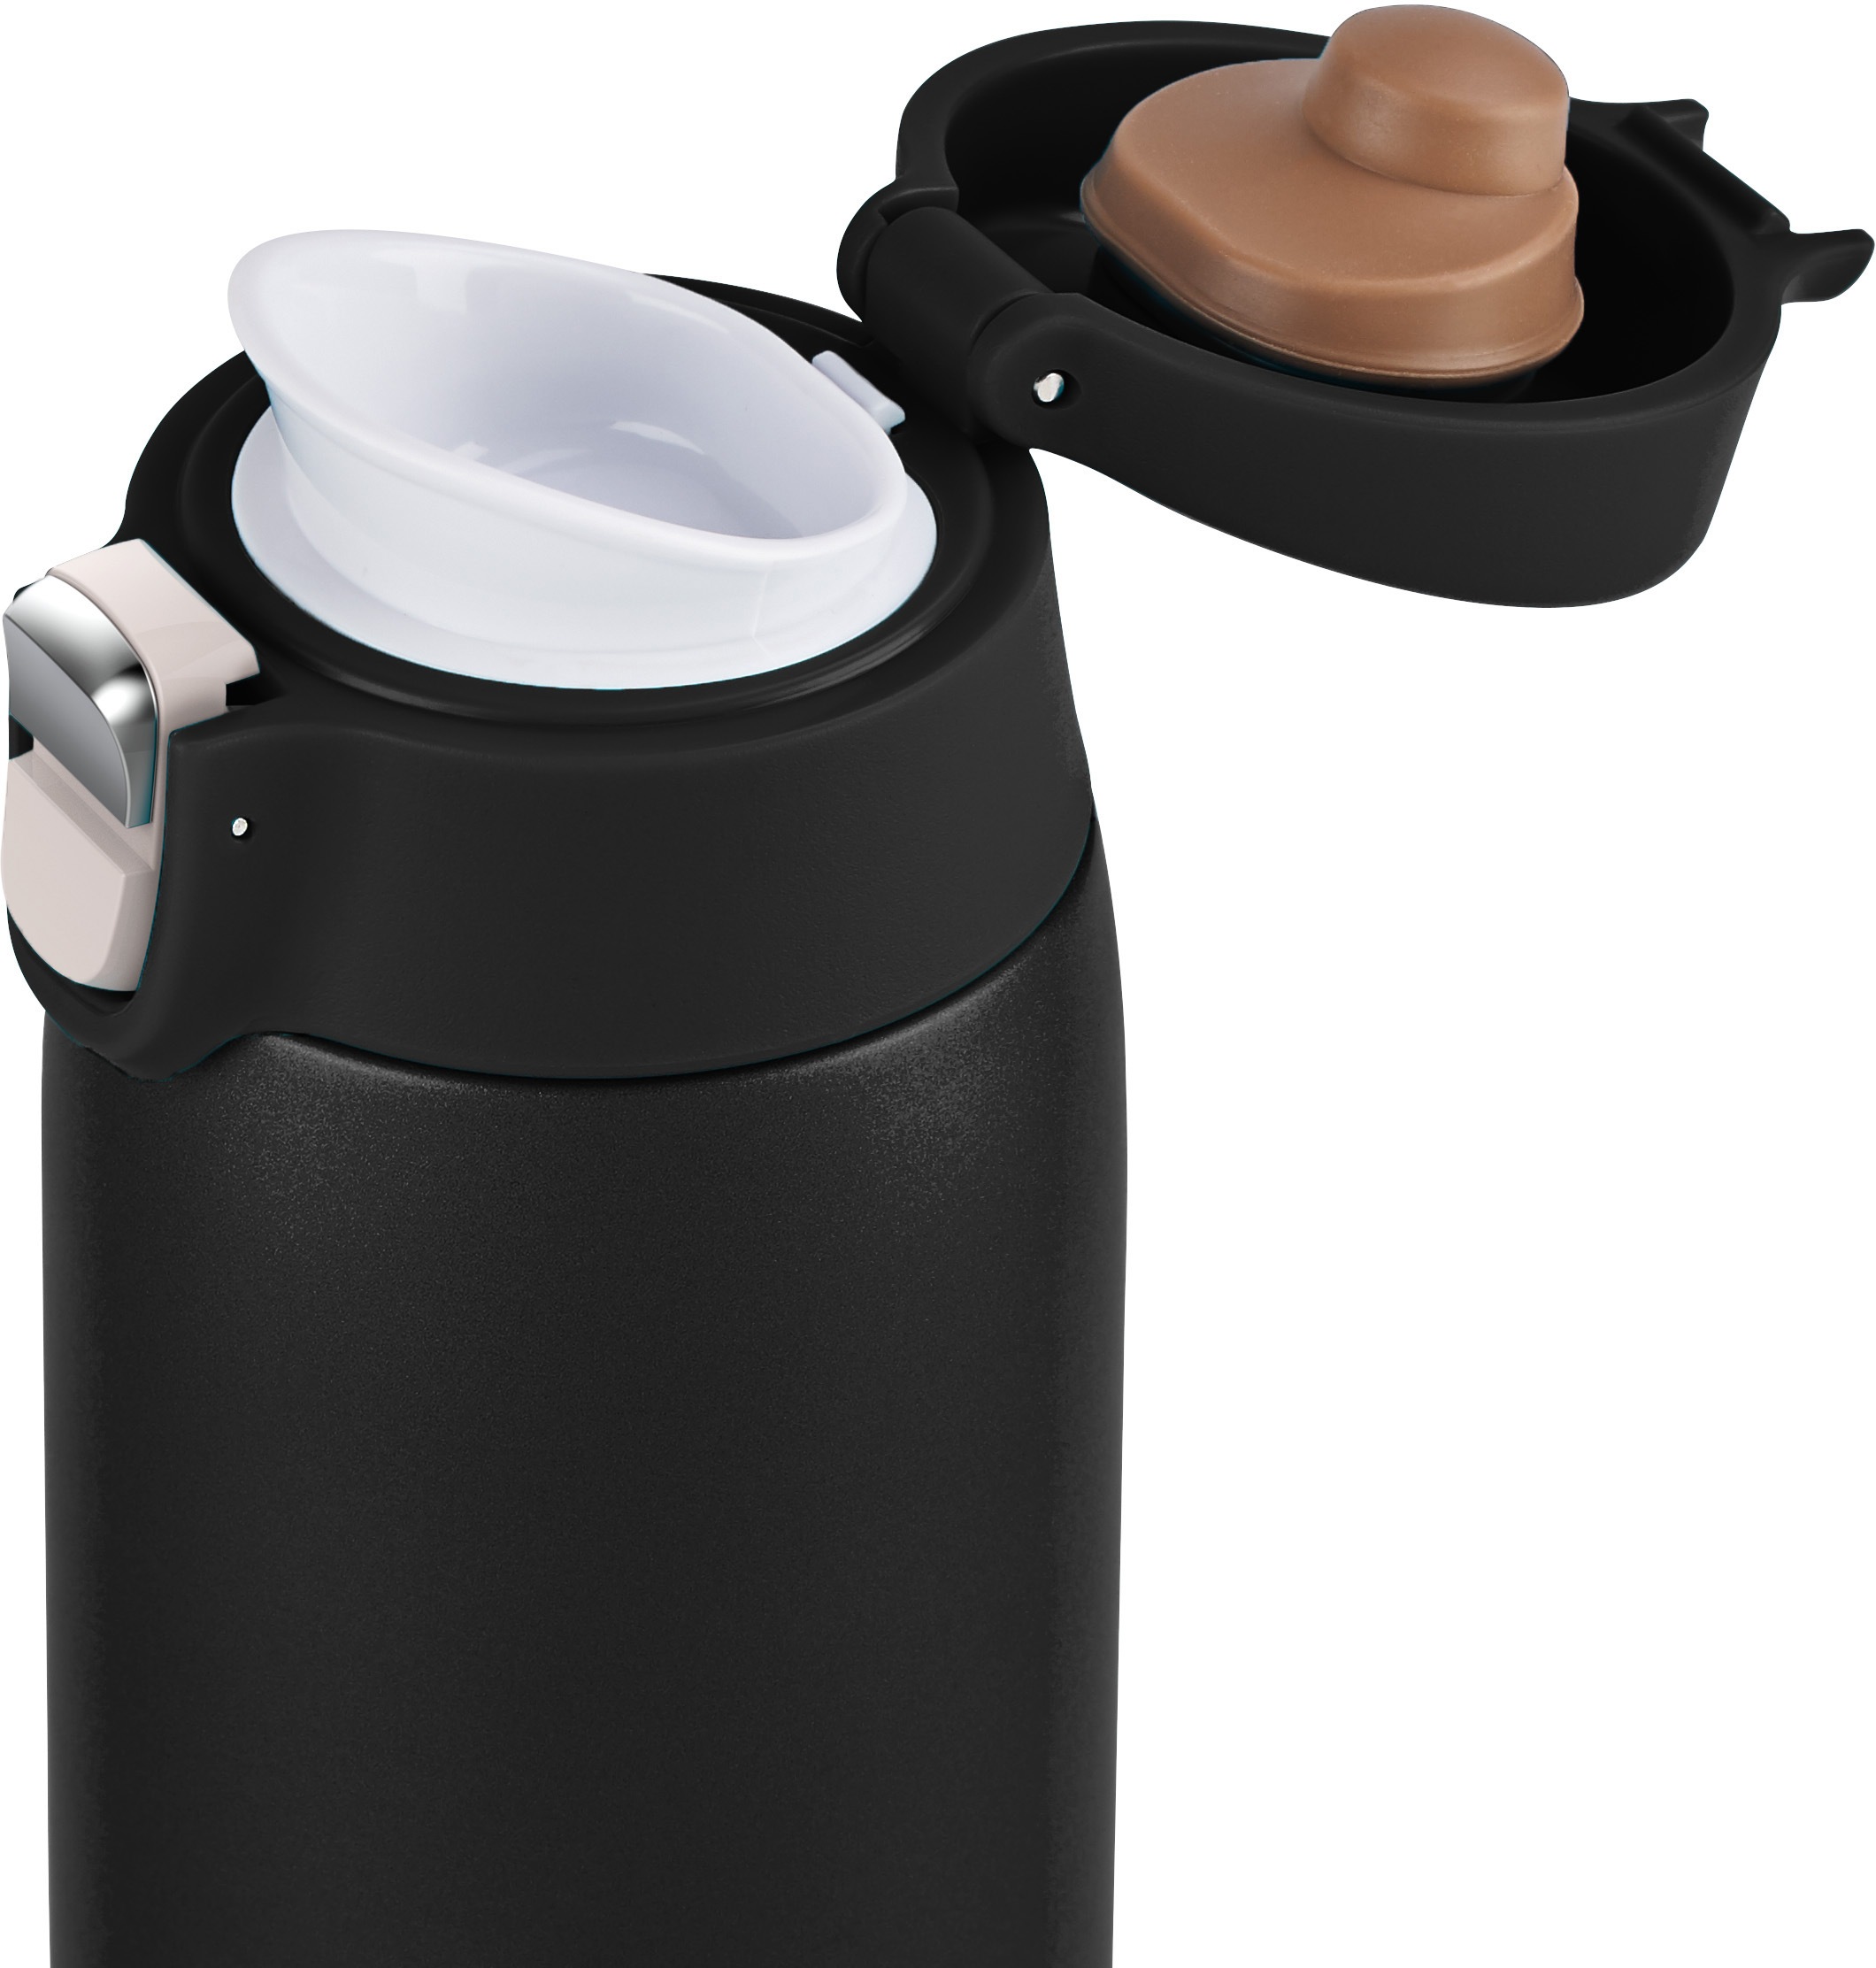 Emsa Thermobecher »Travel Mug Light«, 0,4L, leicht, Edelstahl, Klappverschluss, 100% dicht, 8h heiß/16h kalt